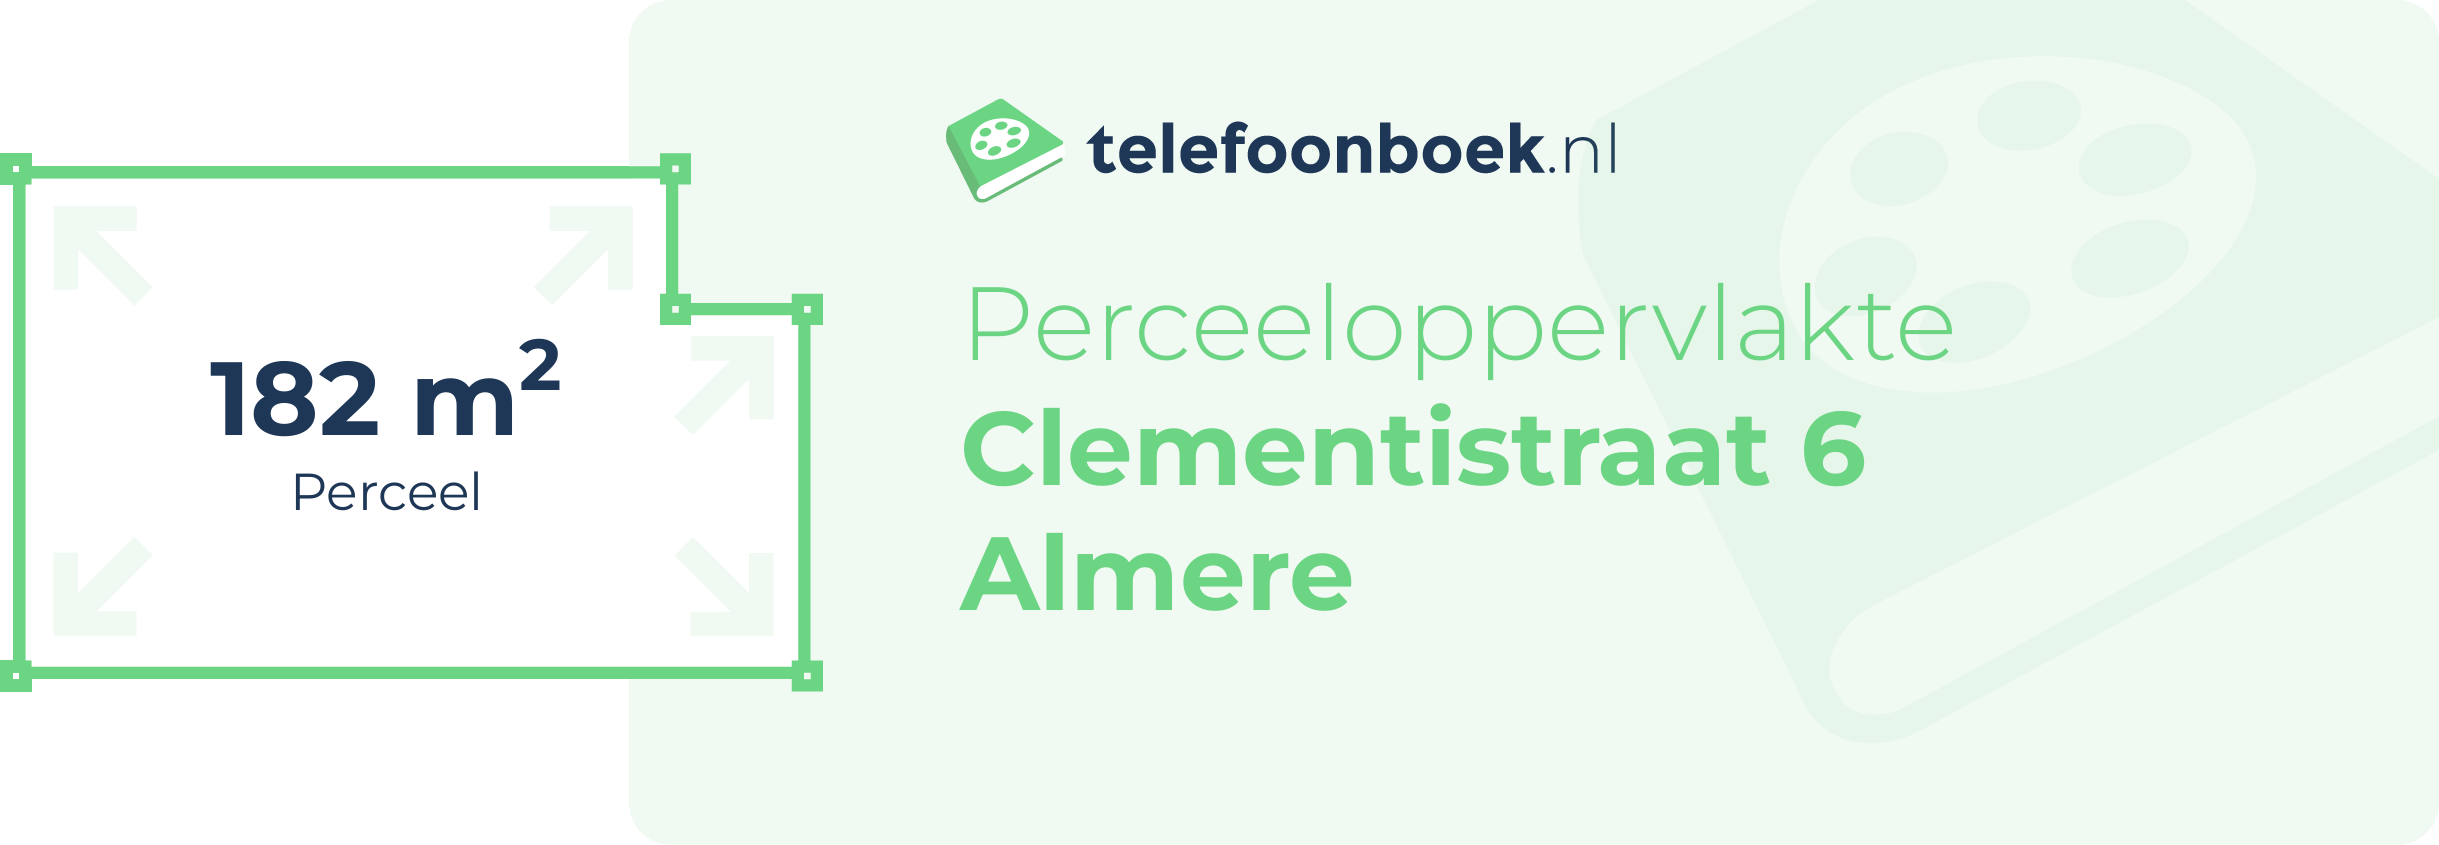 Perceeloppervlakte Clementistraat 6 Almere